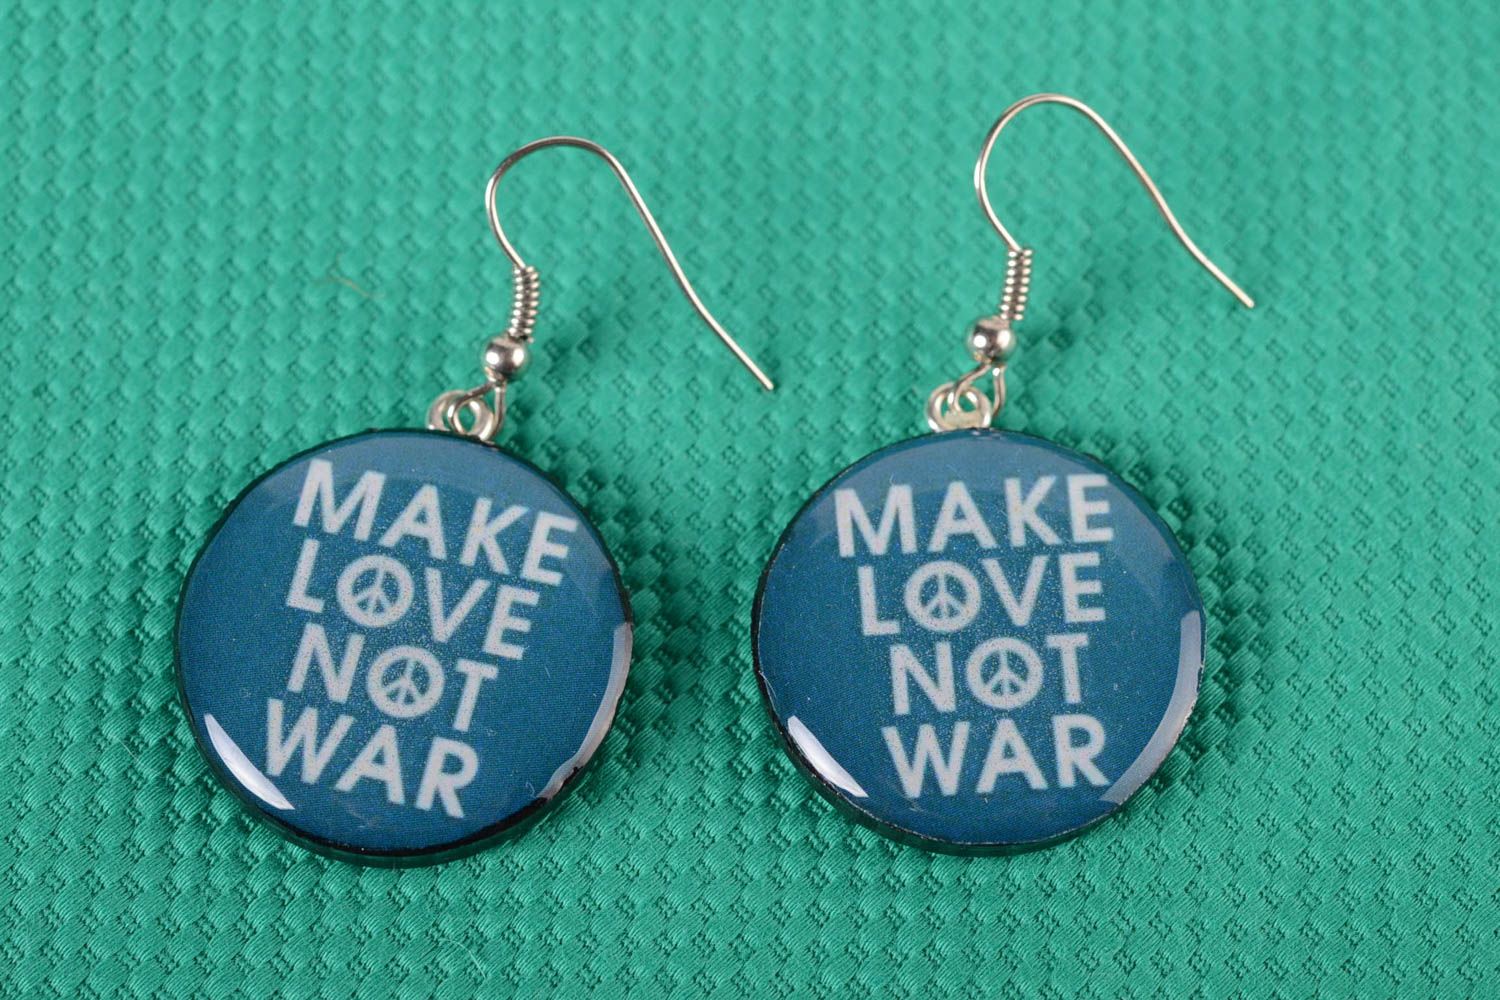 Fashion earrings handmade decoupage clay earrings with slogan jewelry for women photo 1